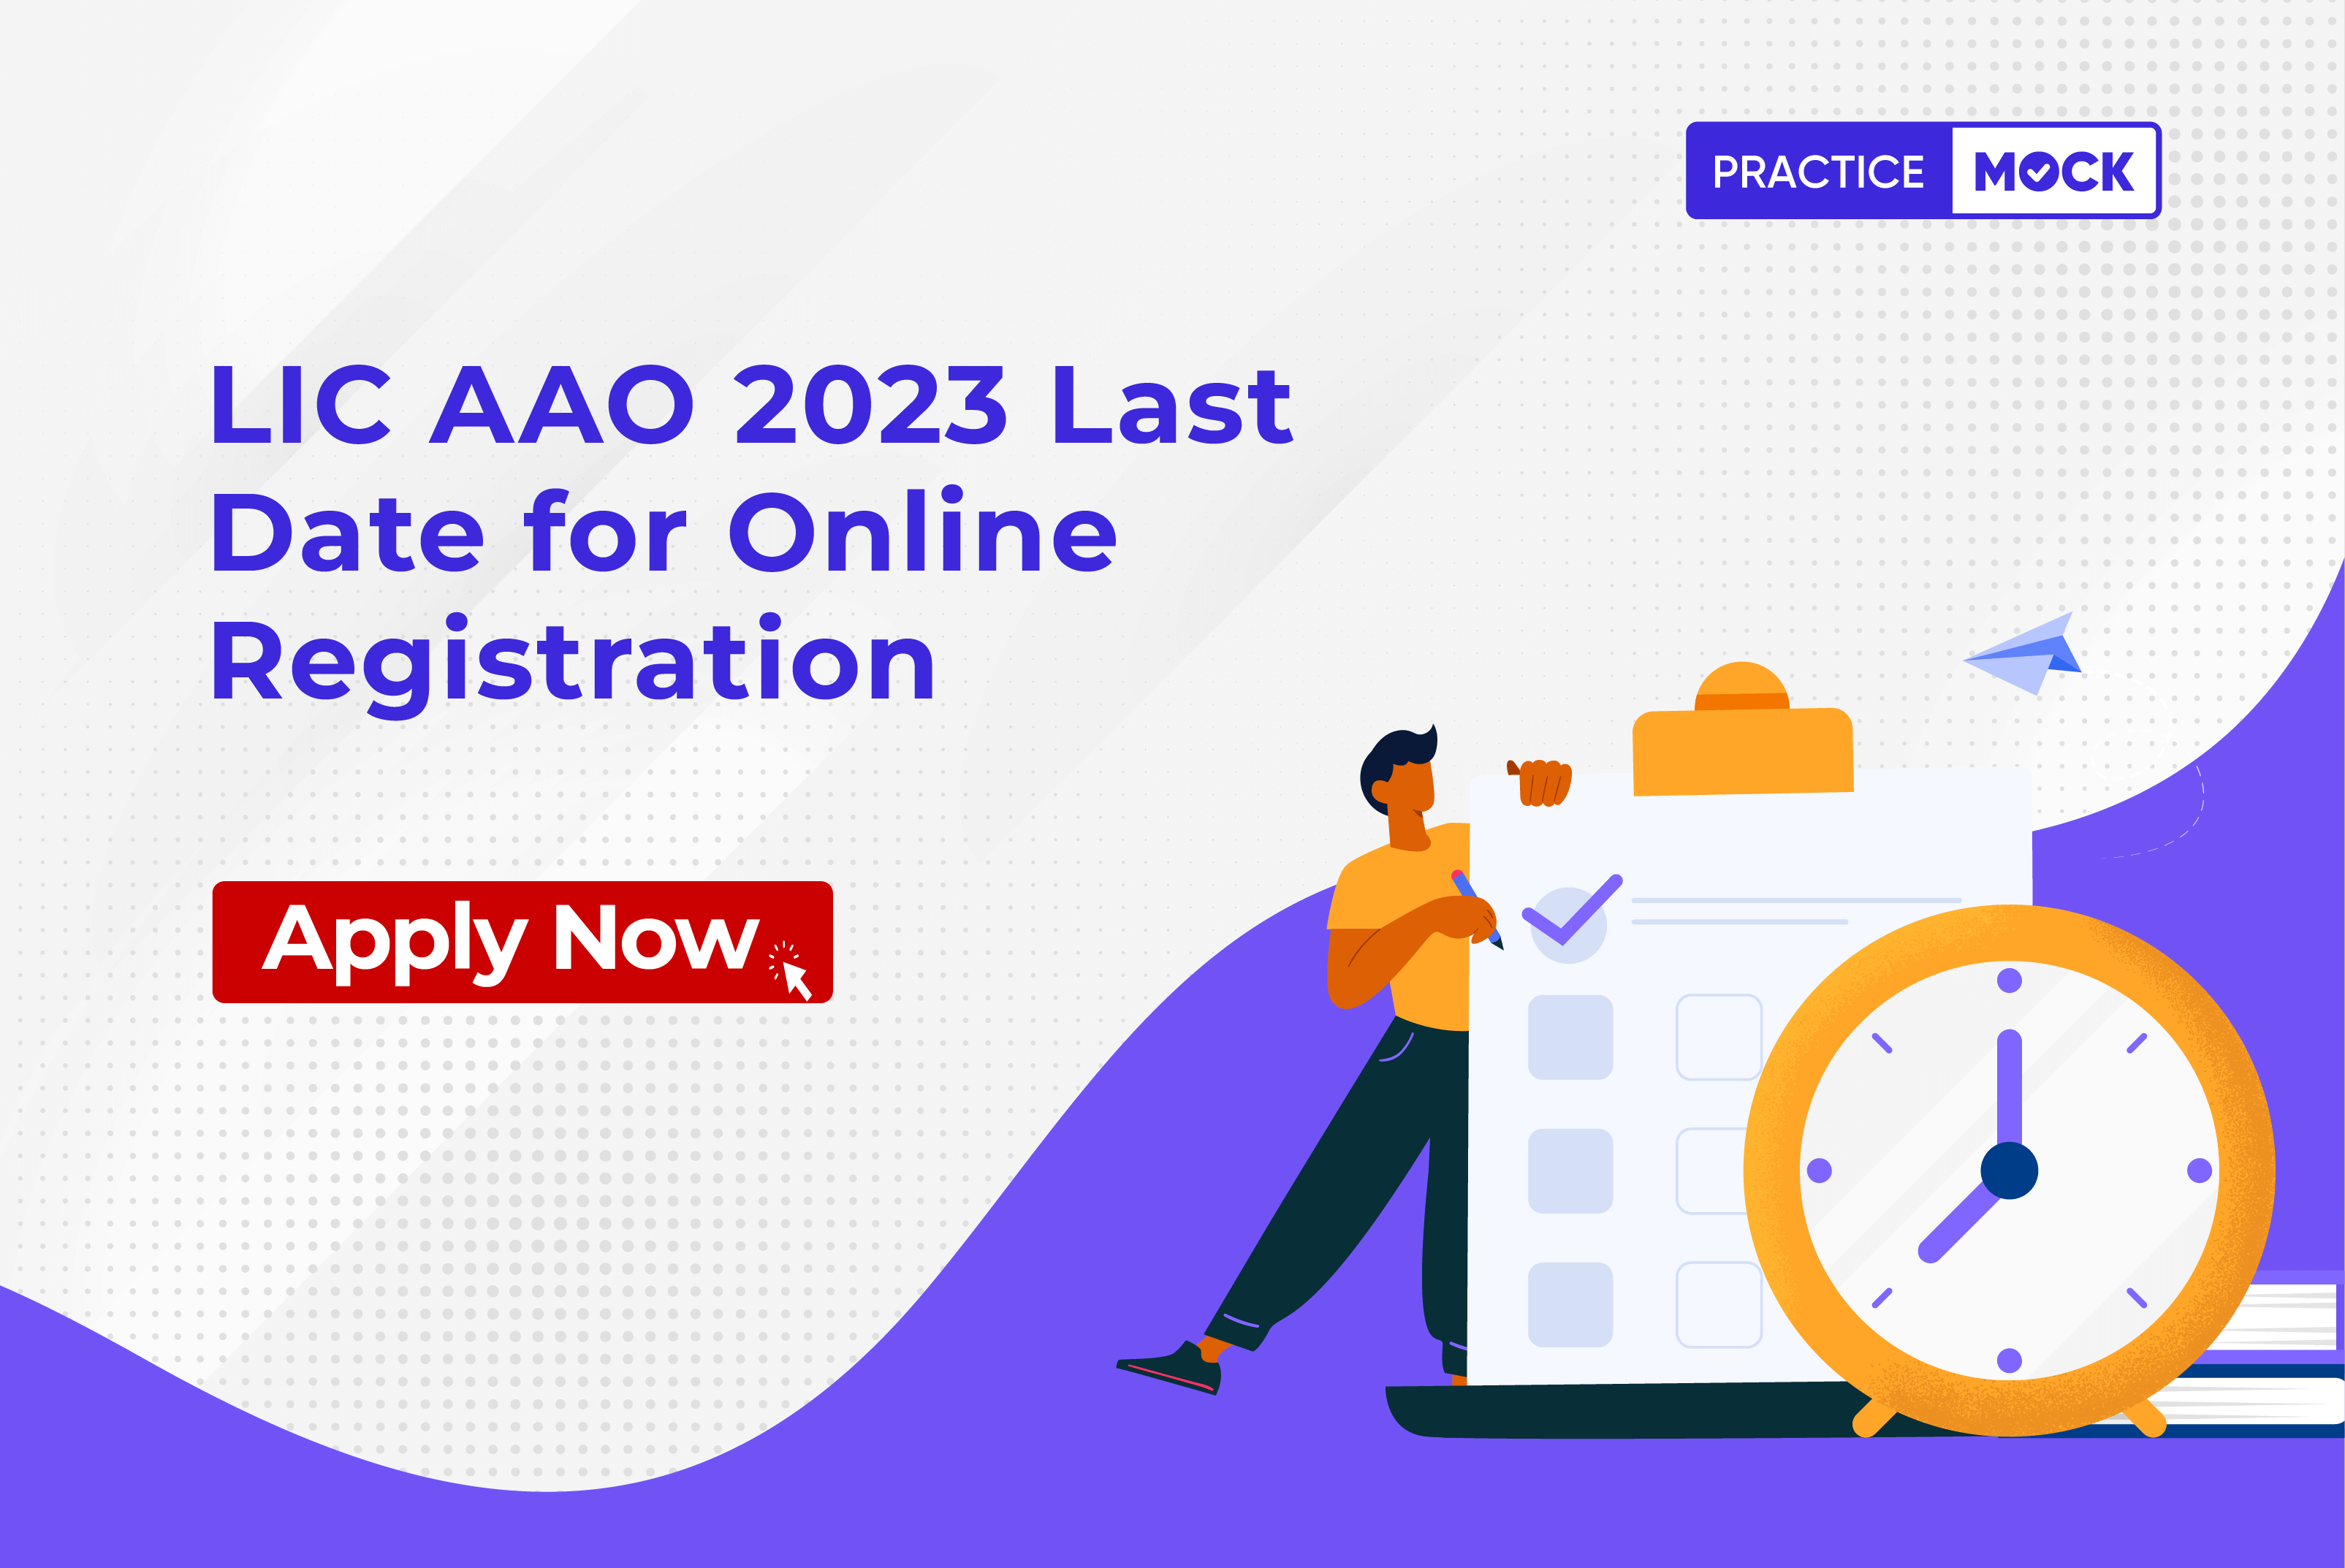 LIC AAO Last Date for Online Registration